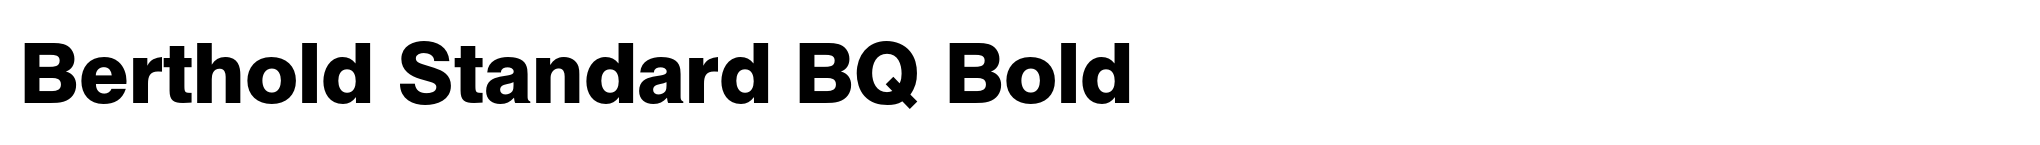 Berthold Standard BQ Bold image